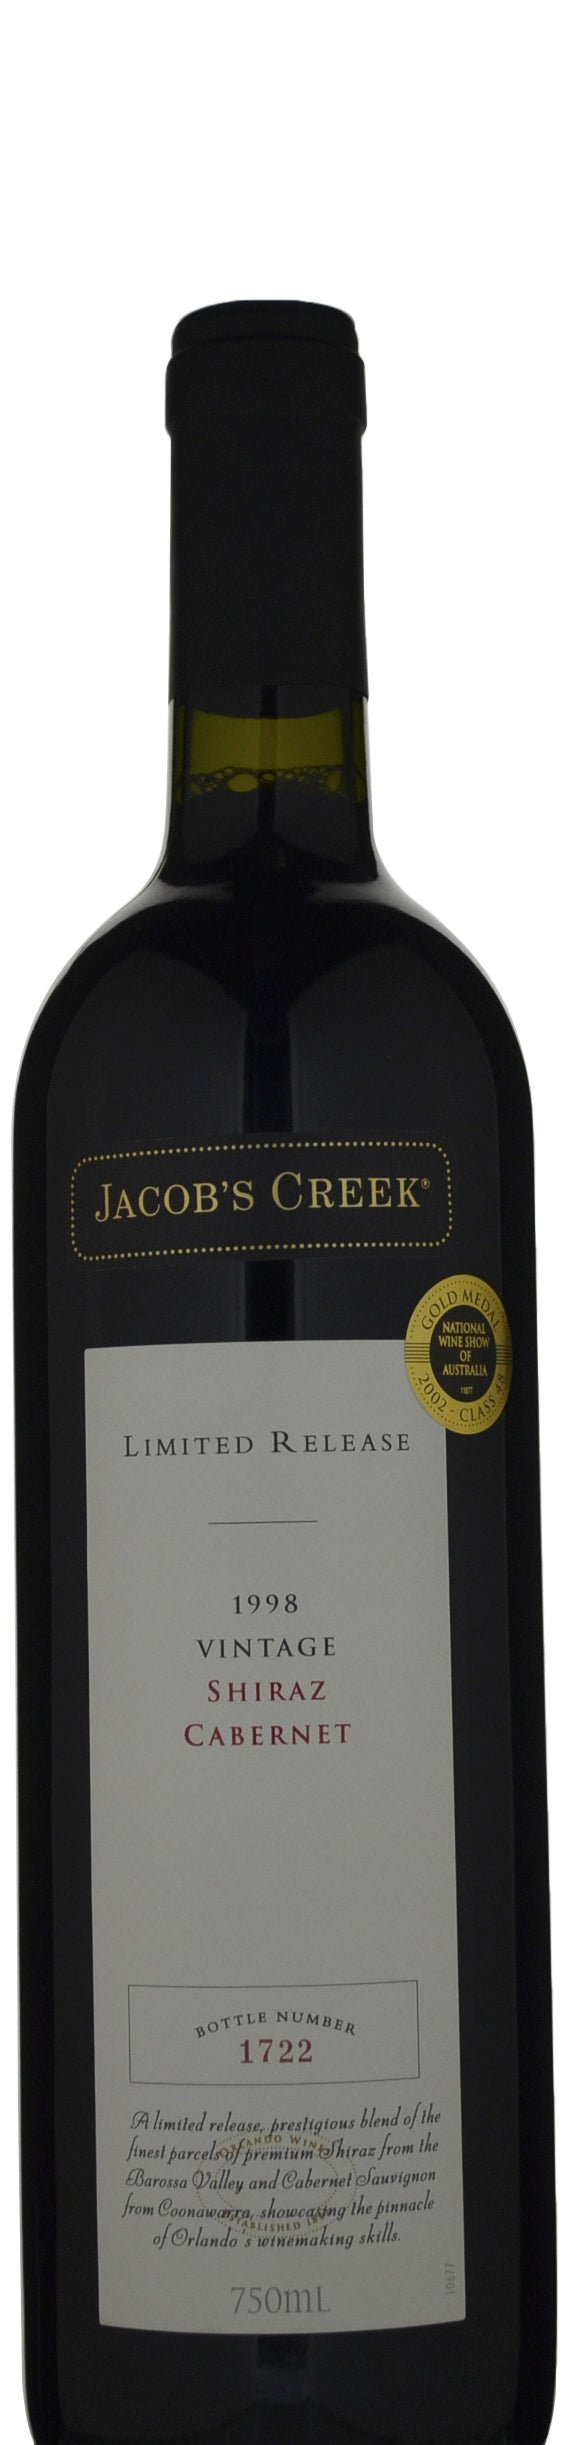 Jacob's Creek Limited Release Shiraz Cabernet 1998